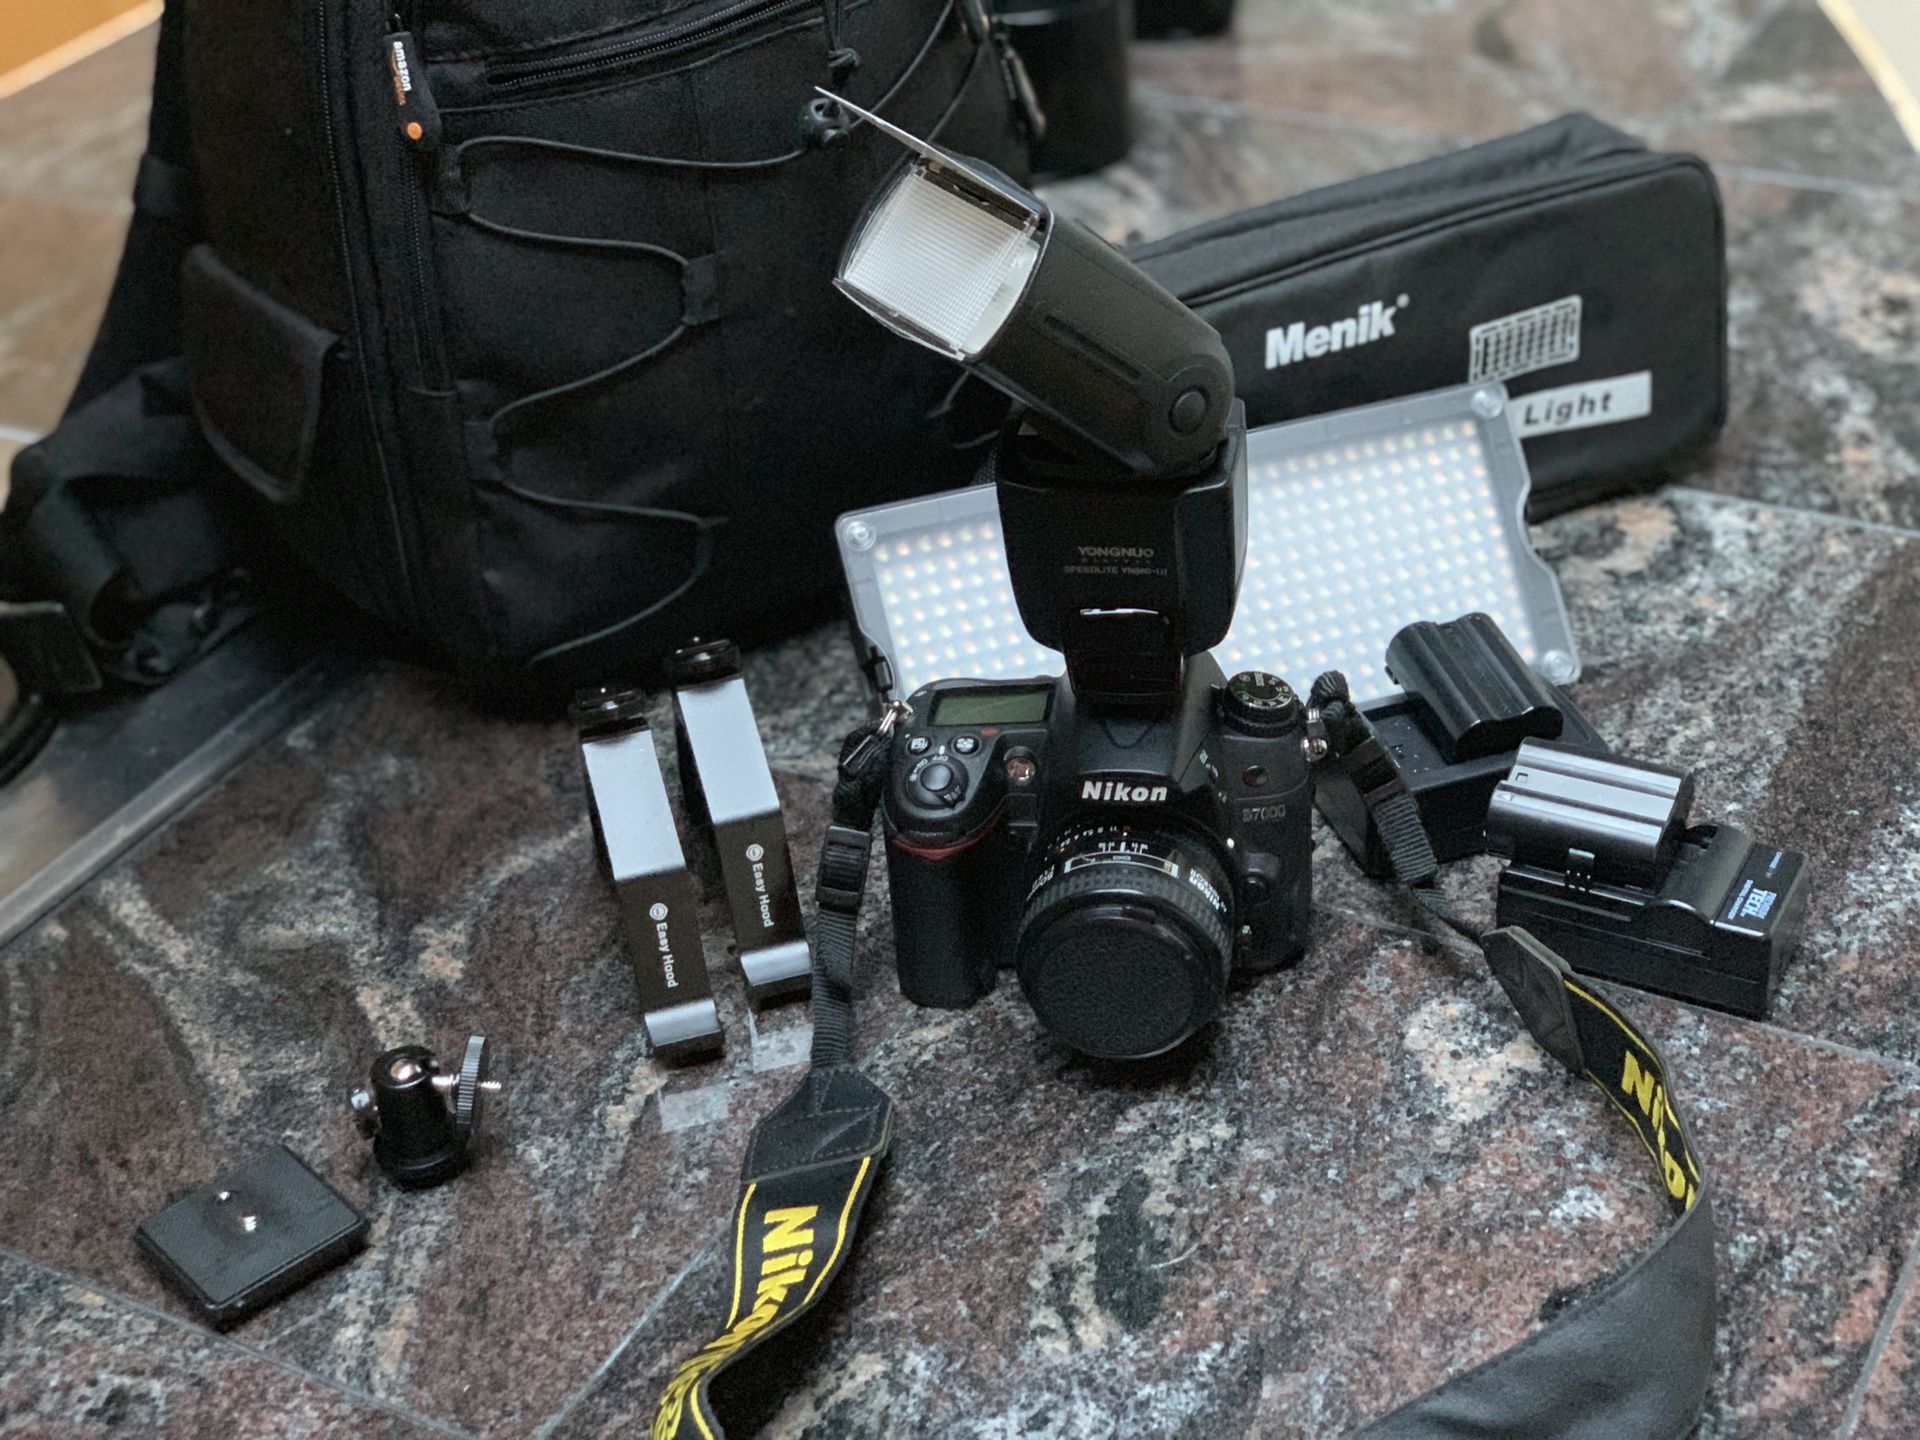 Photographers package -Nikon D7000 camera, 50 mm lens, yongnuo speedlight YN560, camera bag, Menik LED video light, 2 batteries & AC chargers